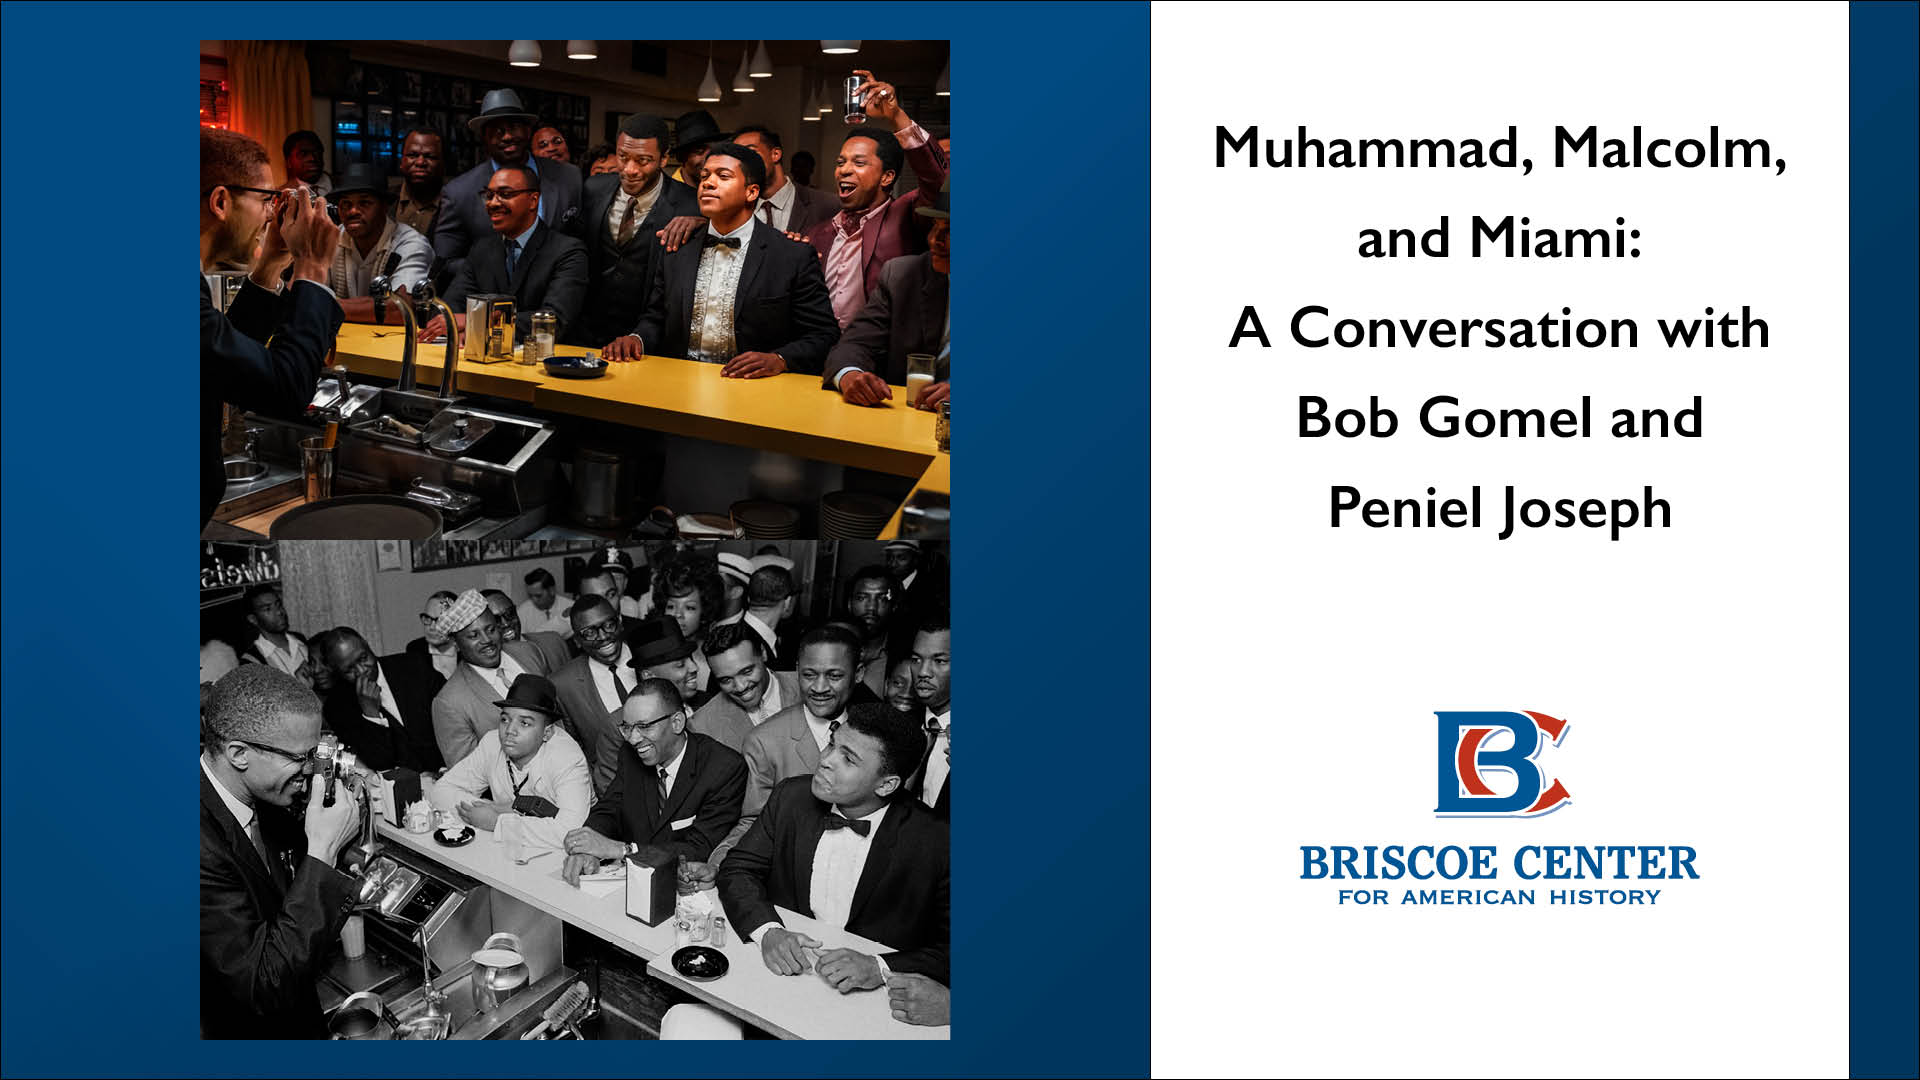 Muhammad, Malcolm, and Miami: A Conversation with Bob Gomel and Peniel Joseph